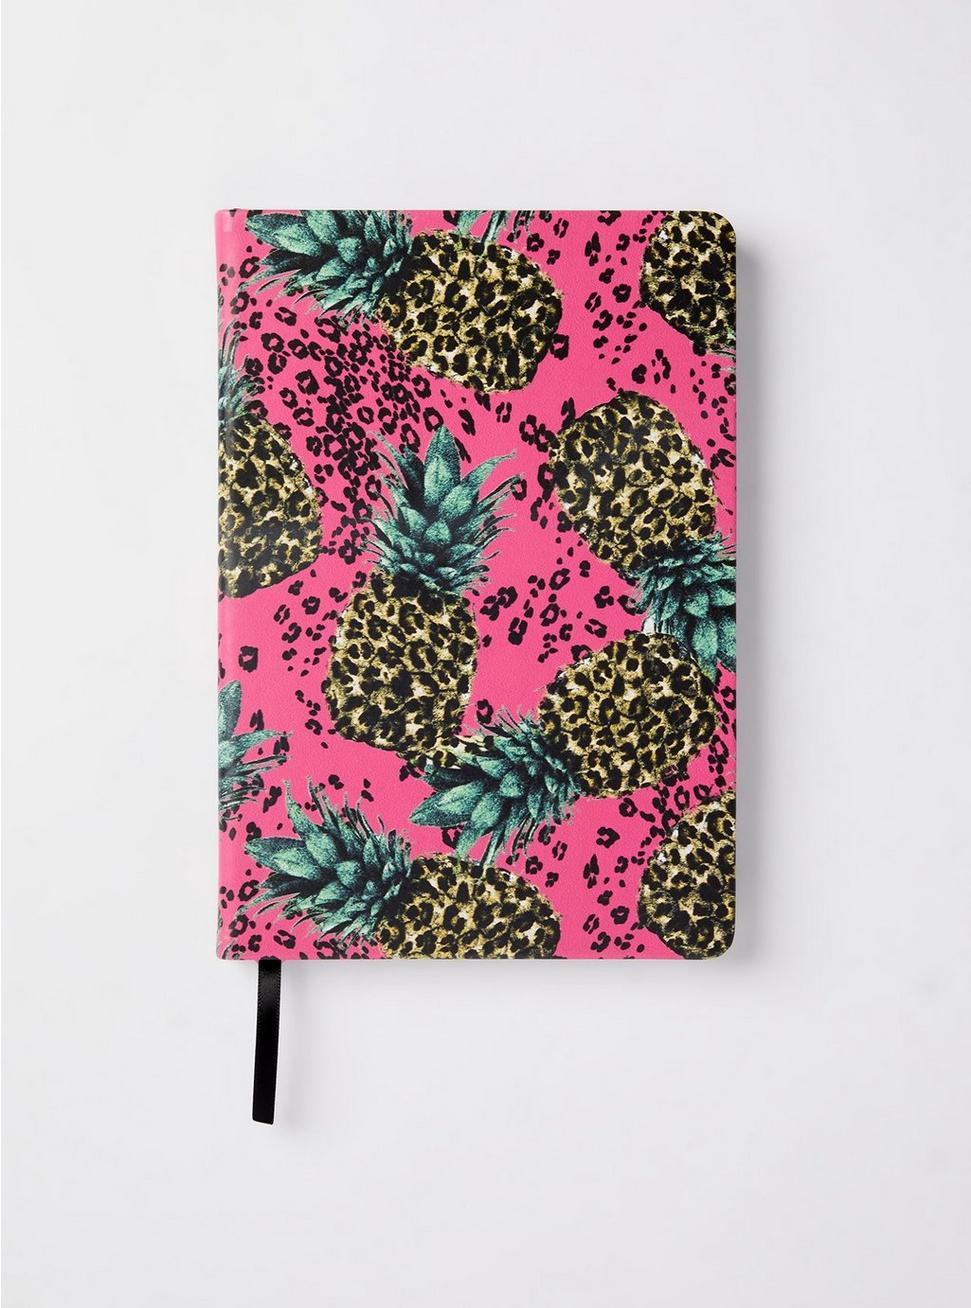 Plus Size 6x8 Notebook - Leopard Pineapple, , hi-res